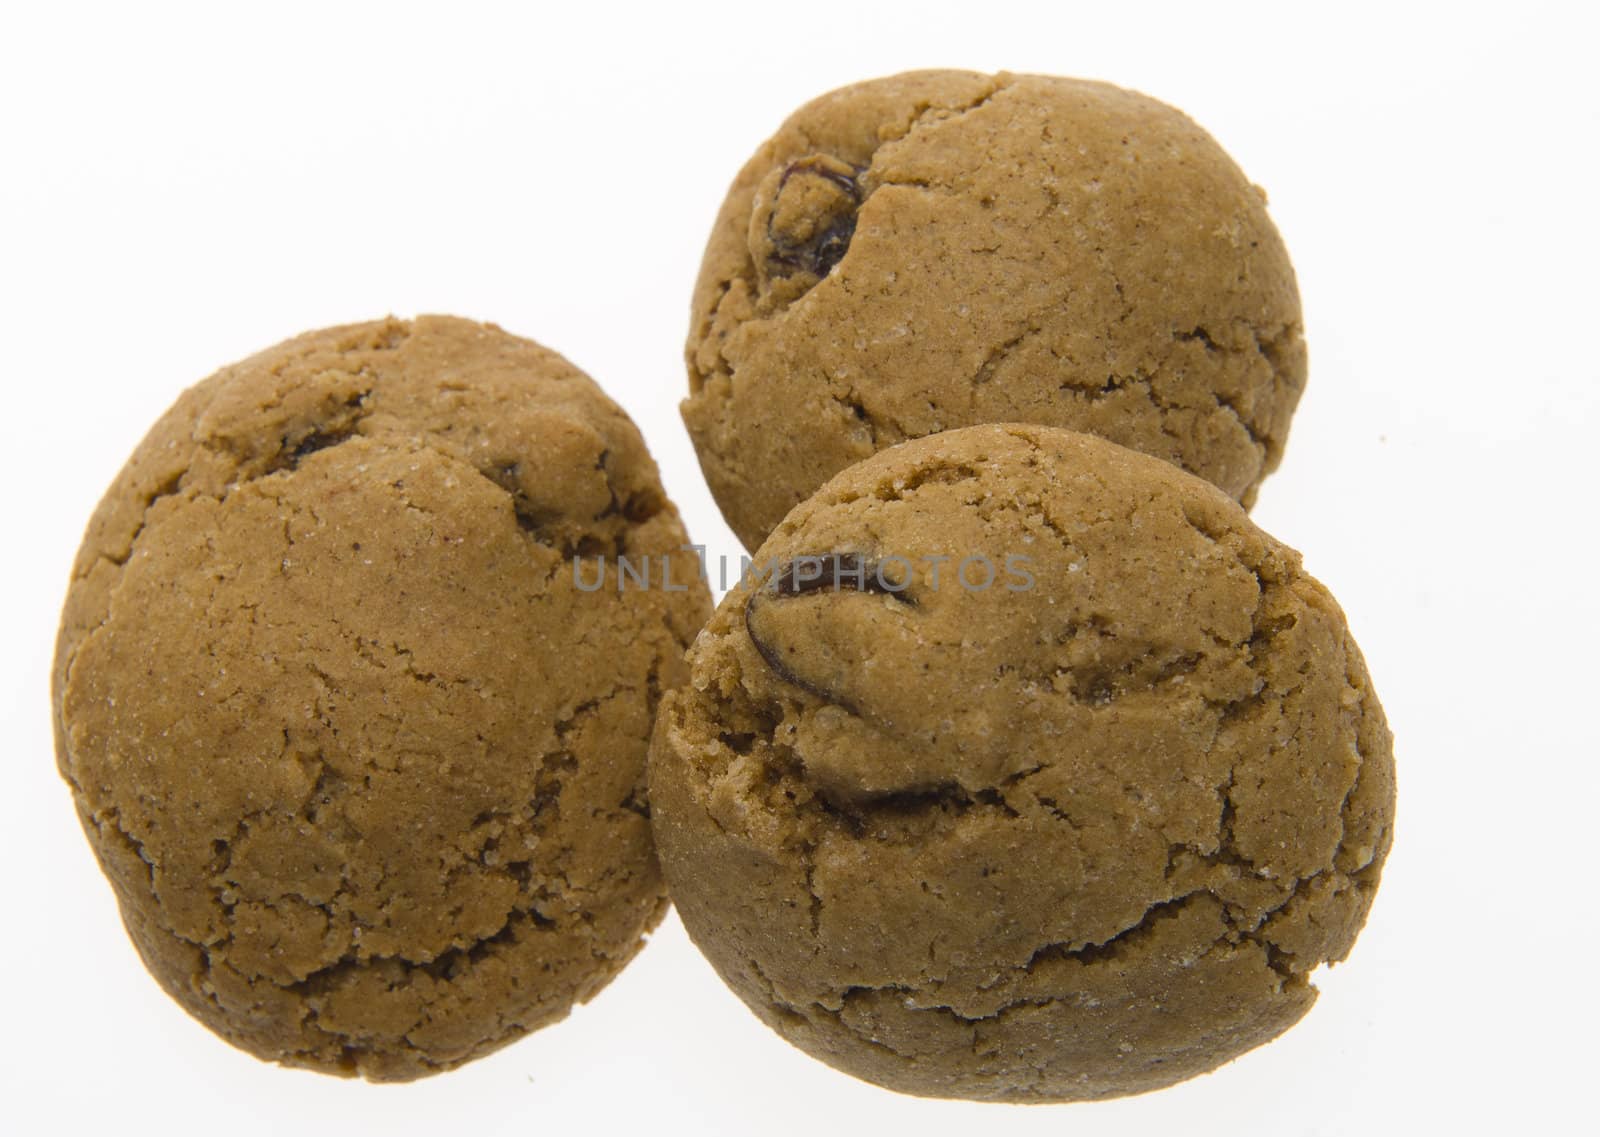 Brown Cookies with raisins by jogvan